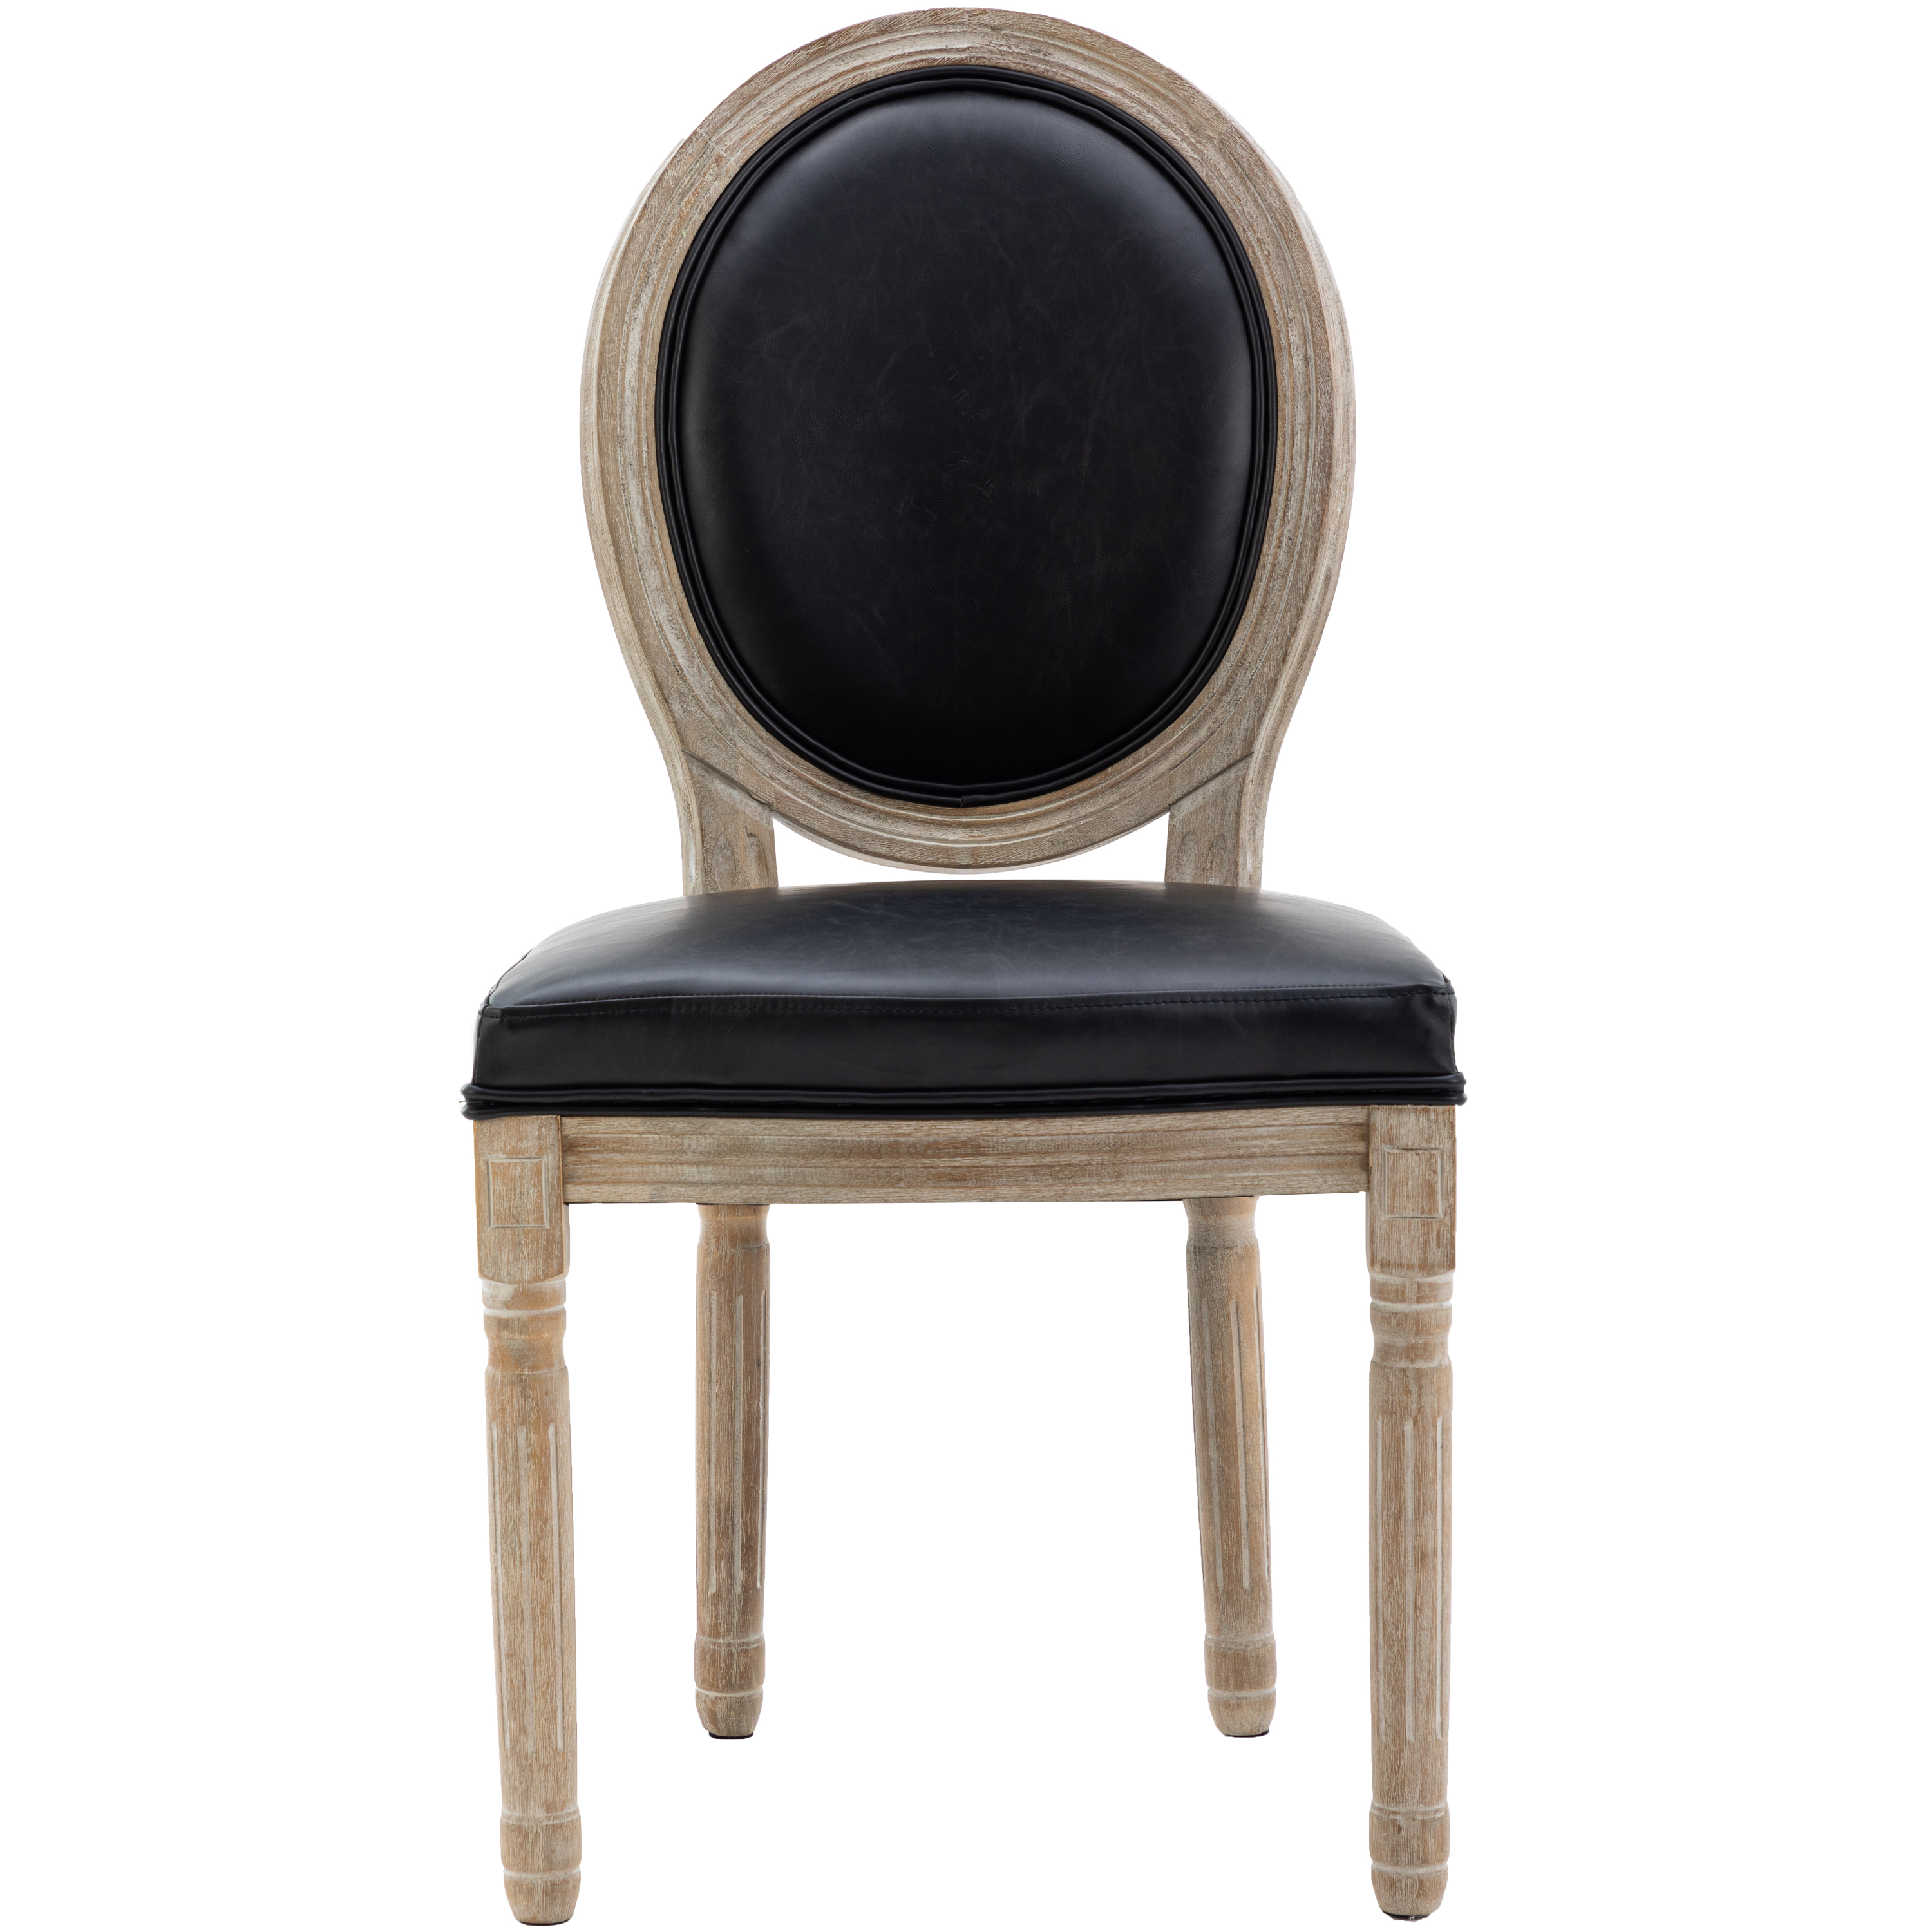 Round Leather Dining Chairs (Set of 2)-Daya Lane-DR,Dining Chairs,Light Wood,Leather,Grey,Brown,Black,DC,farmhouse,french,retro